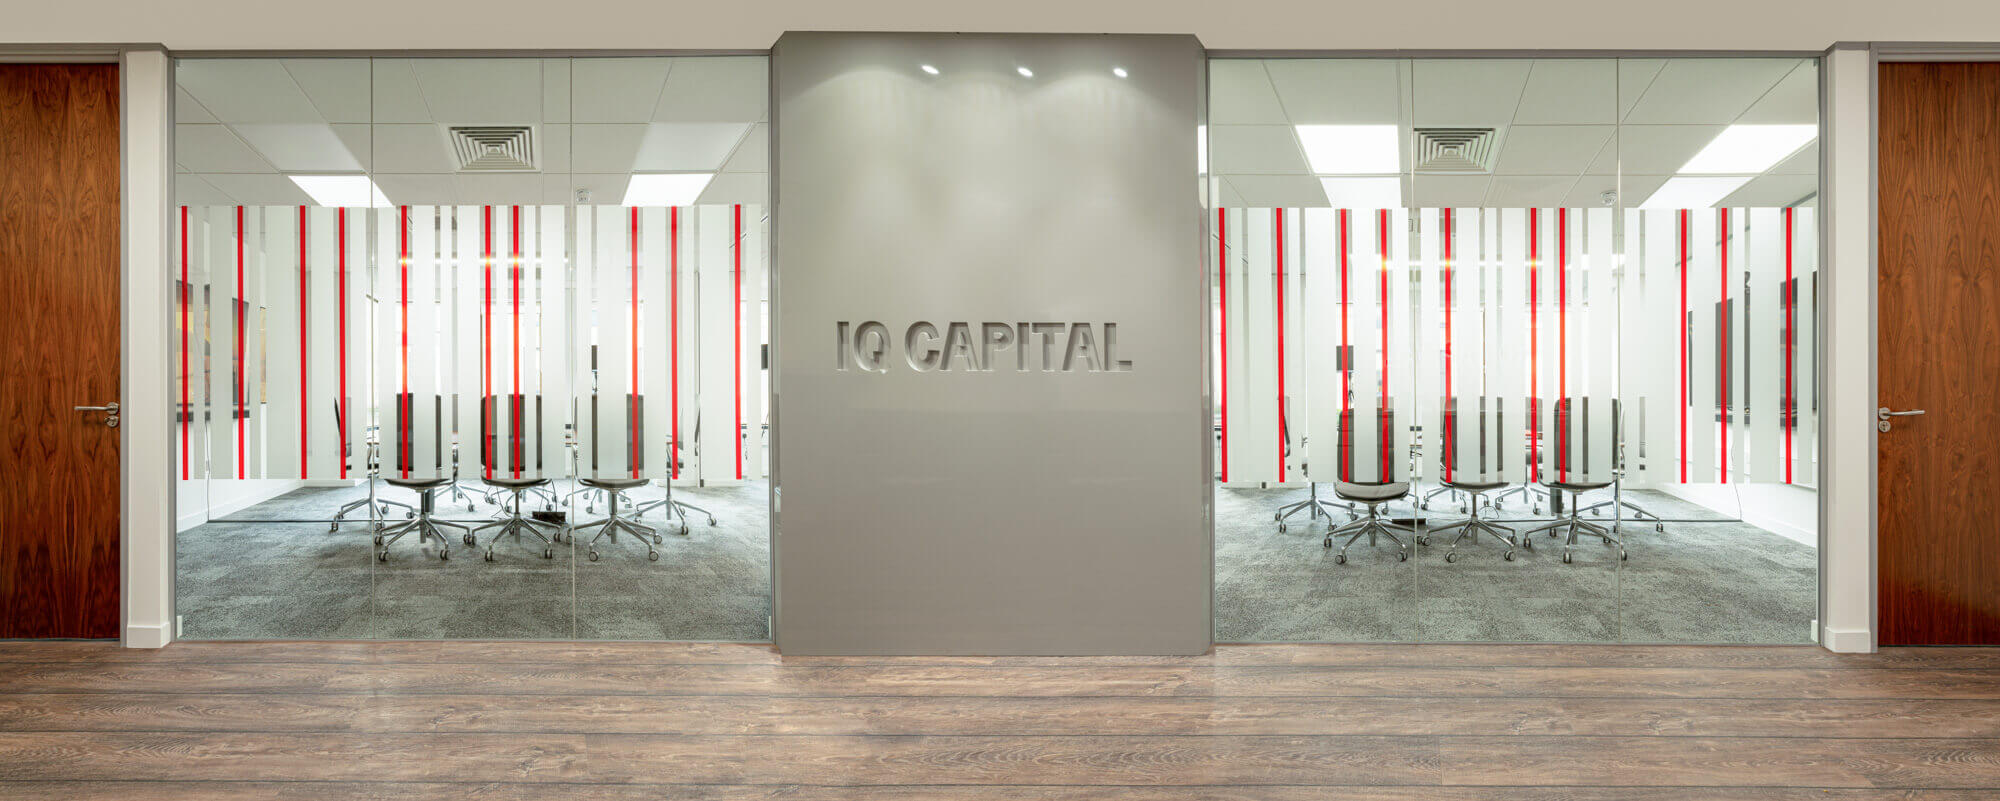 IQ Capital raises $400m to invest in transformative deep tech companies 